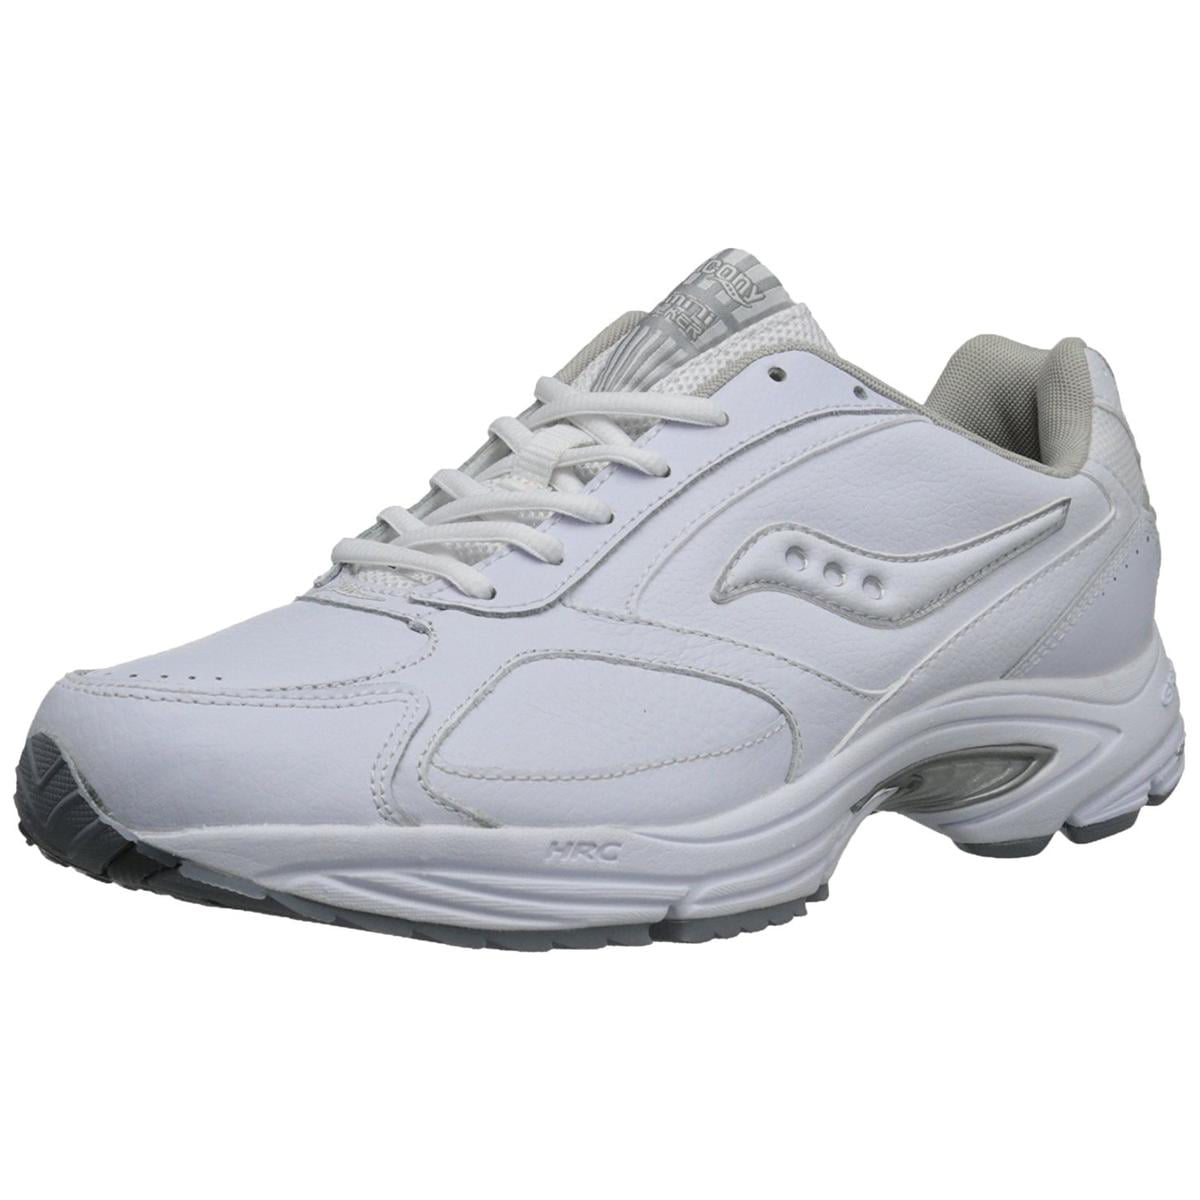 Saucony Grid Omni Walker Mens White/Silver Sneakers - Walmart.com